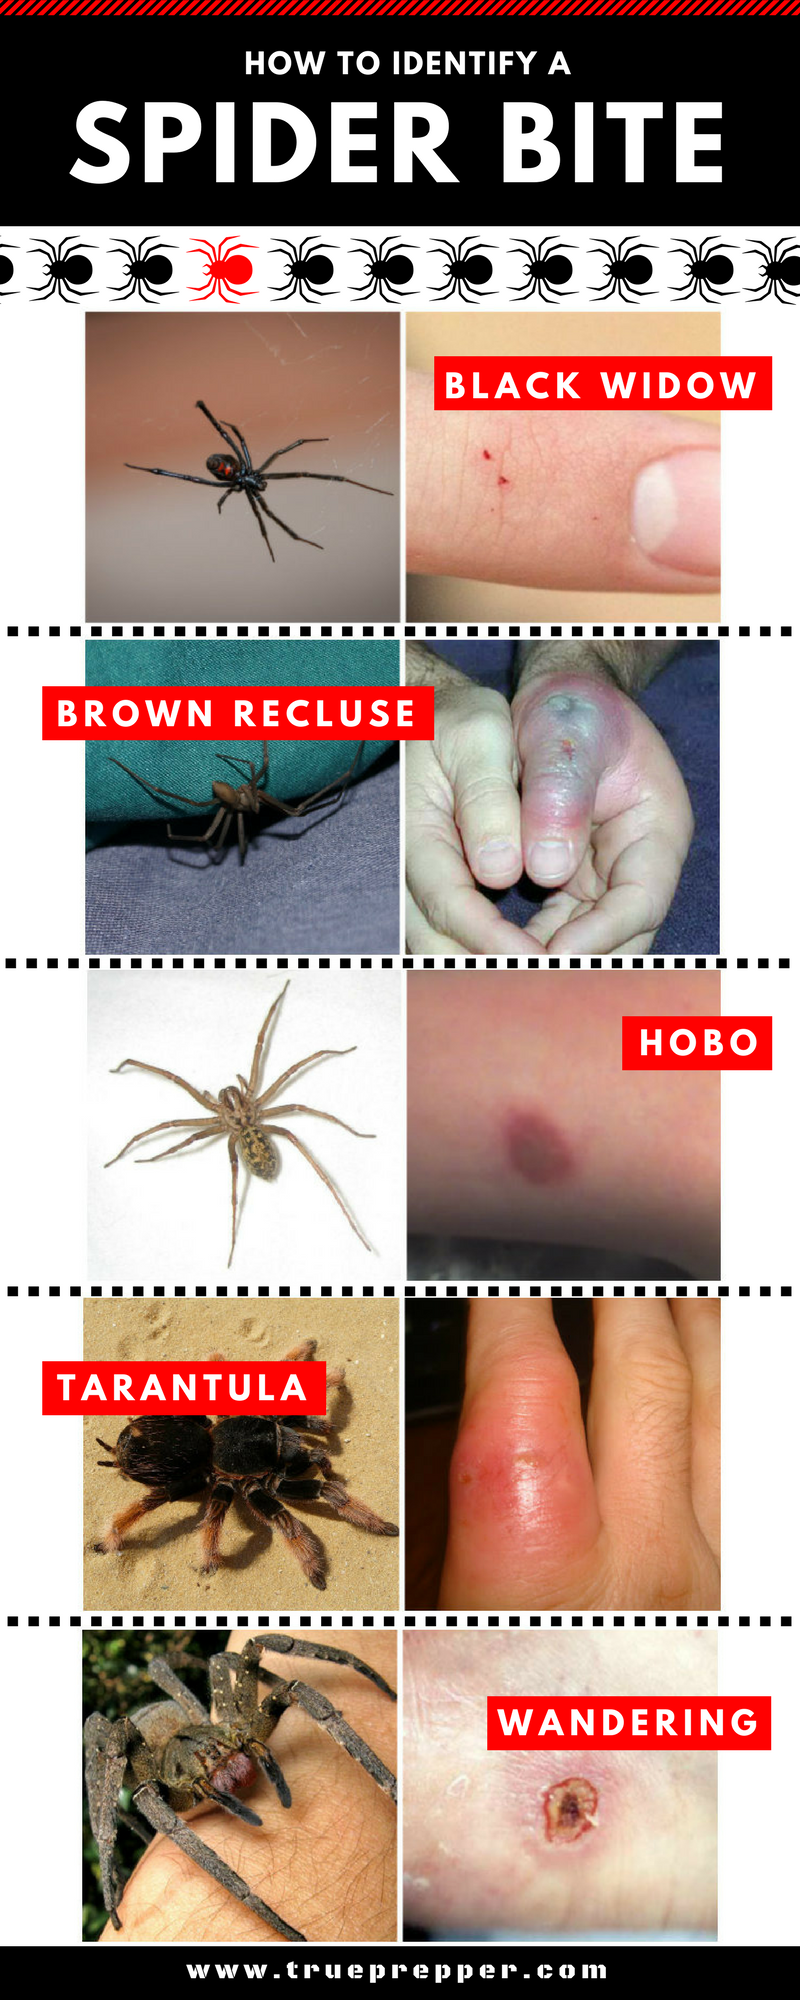 How to Identify a Spider Bite TruePrepper